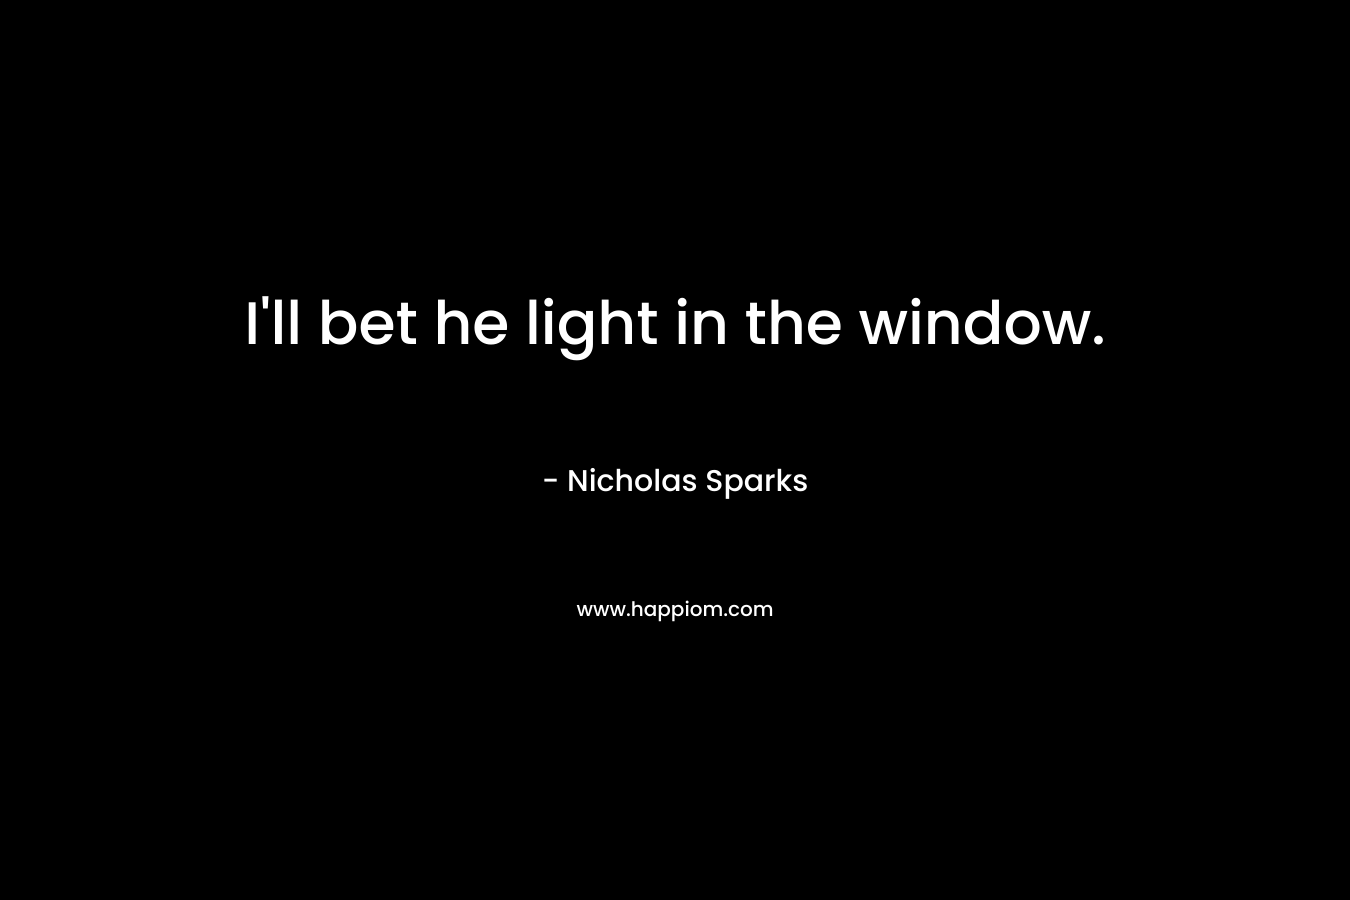 I'll bet he light in the window.